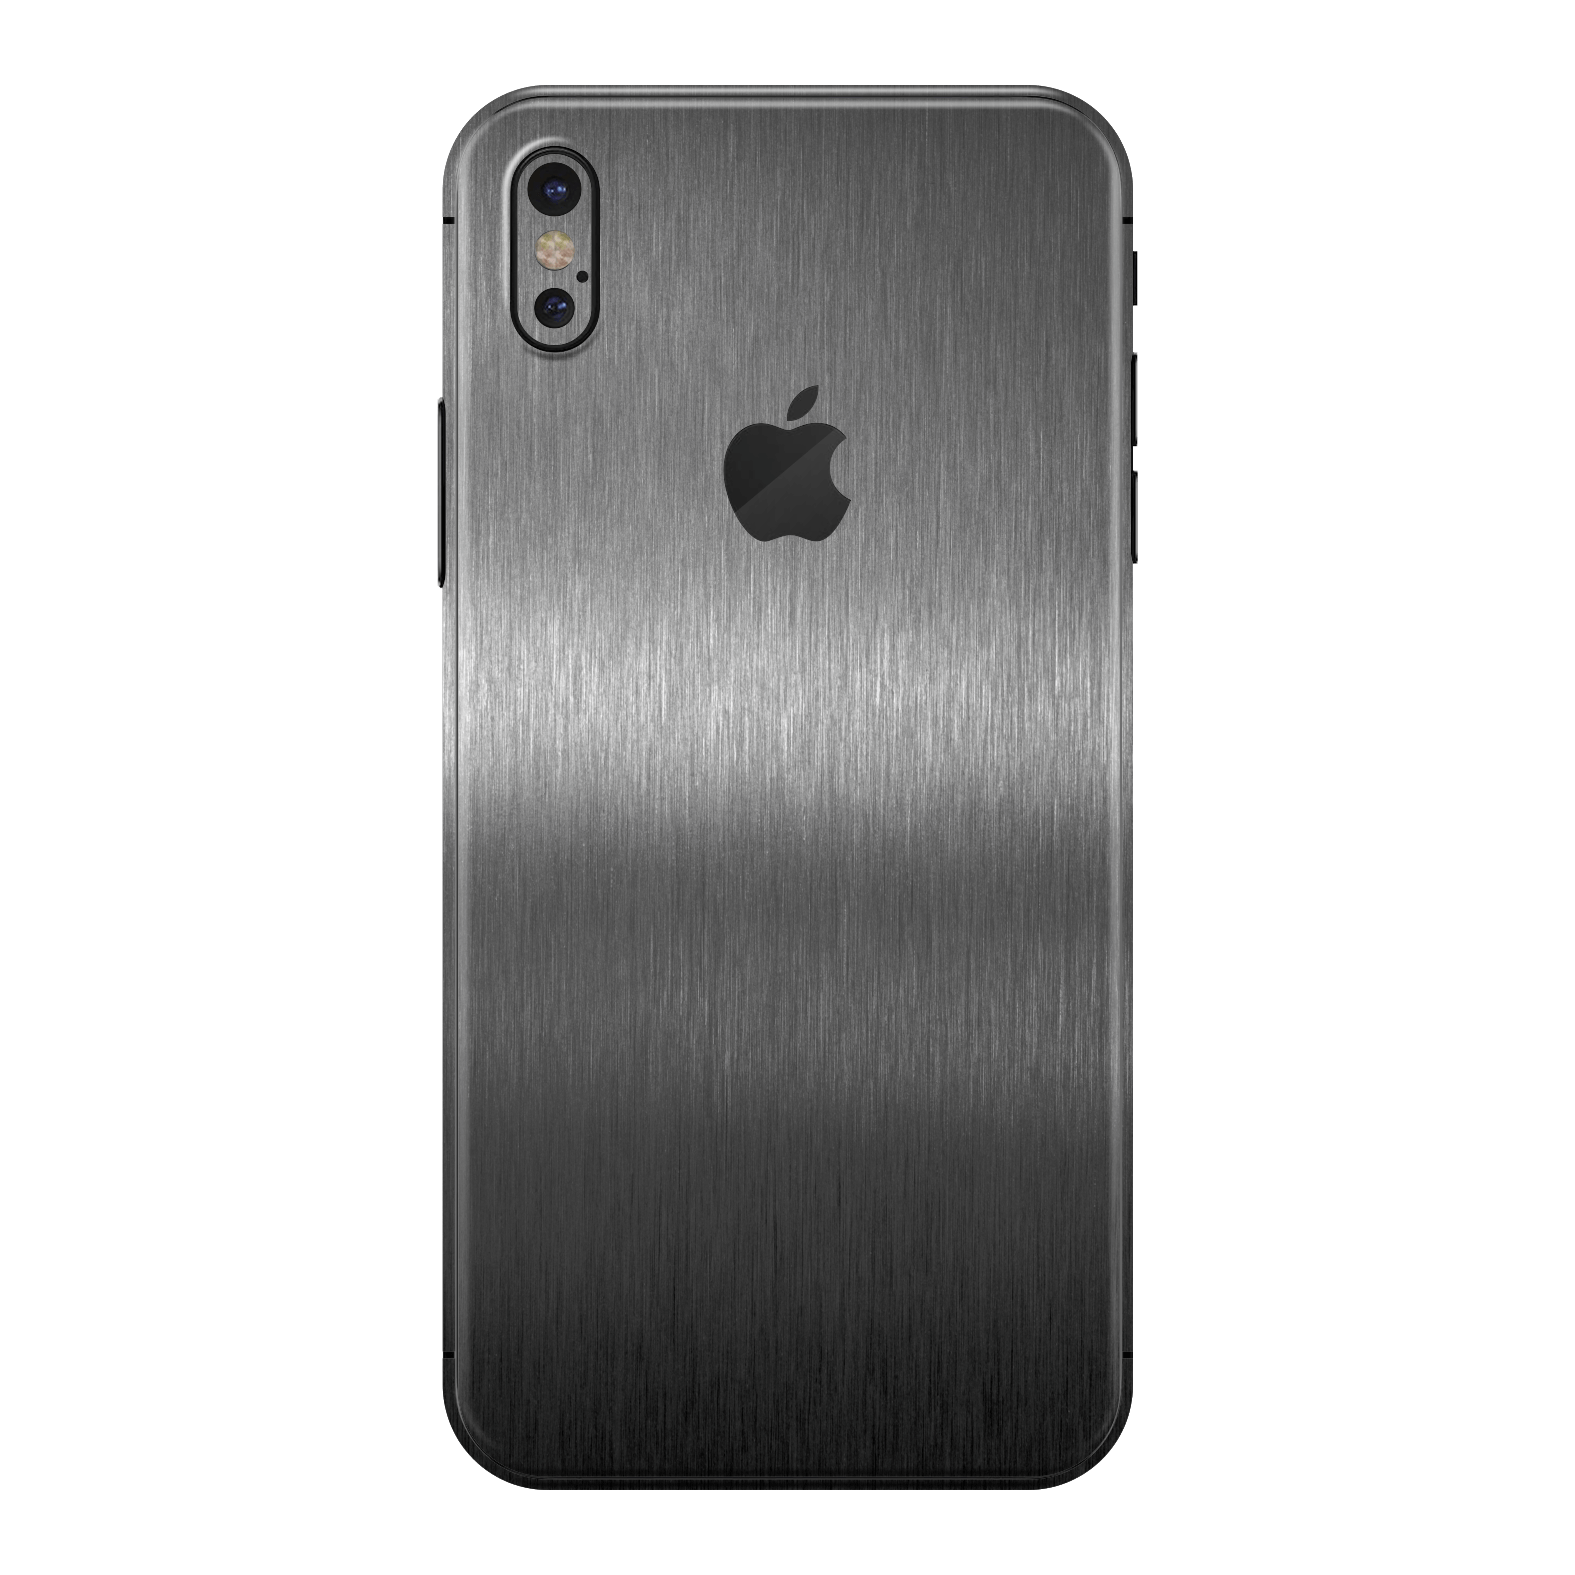 iPhone XS MAX Brushed Metal Titanium Metallic Skin Wrap Sticker Decal Cover Protector by EasySkinz | EasySkinz.com